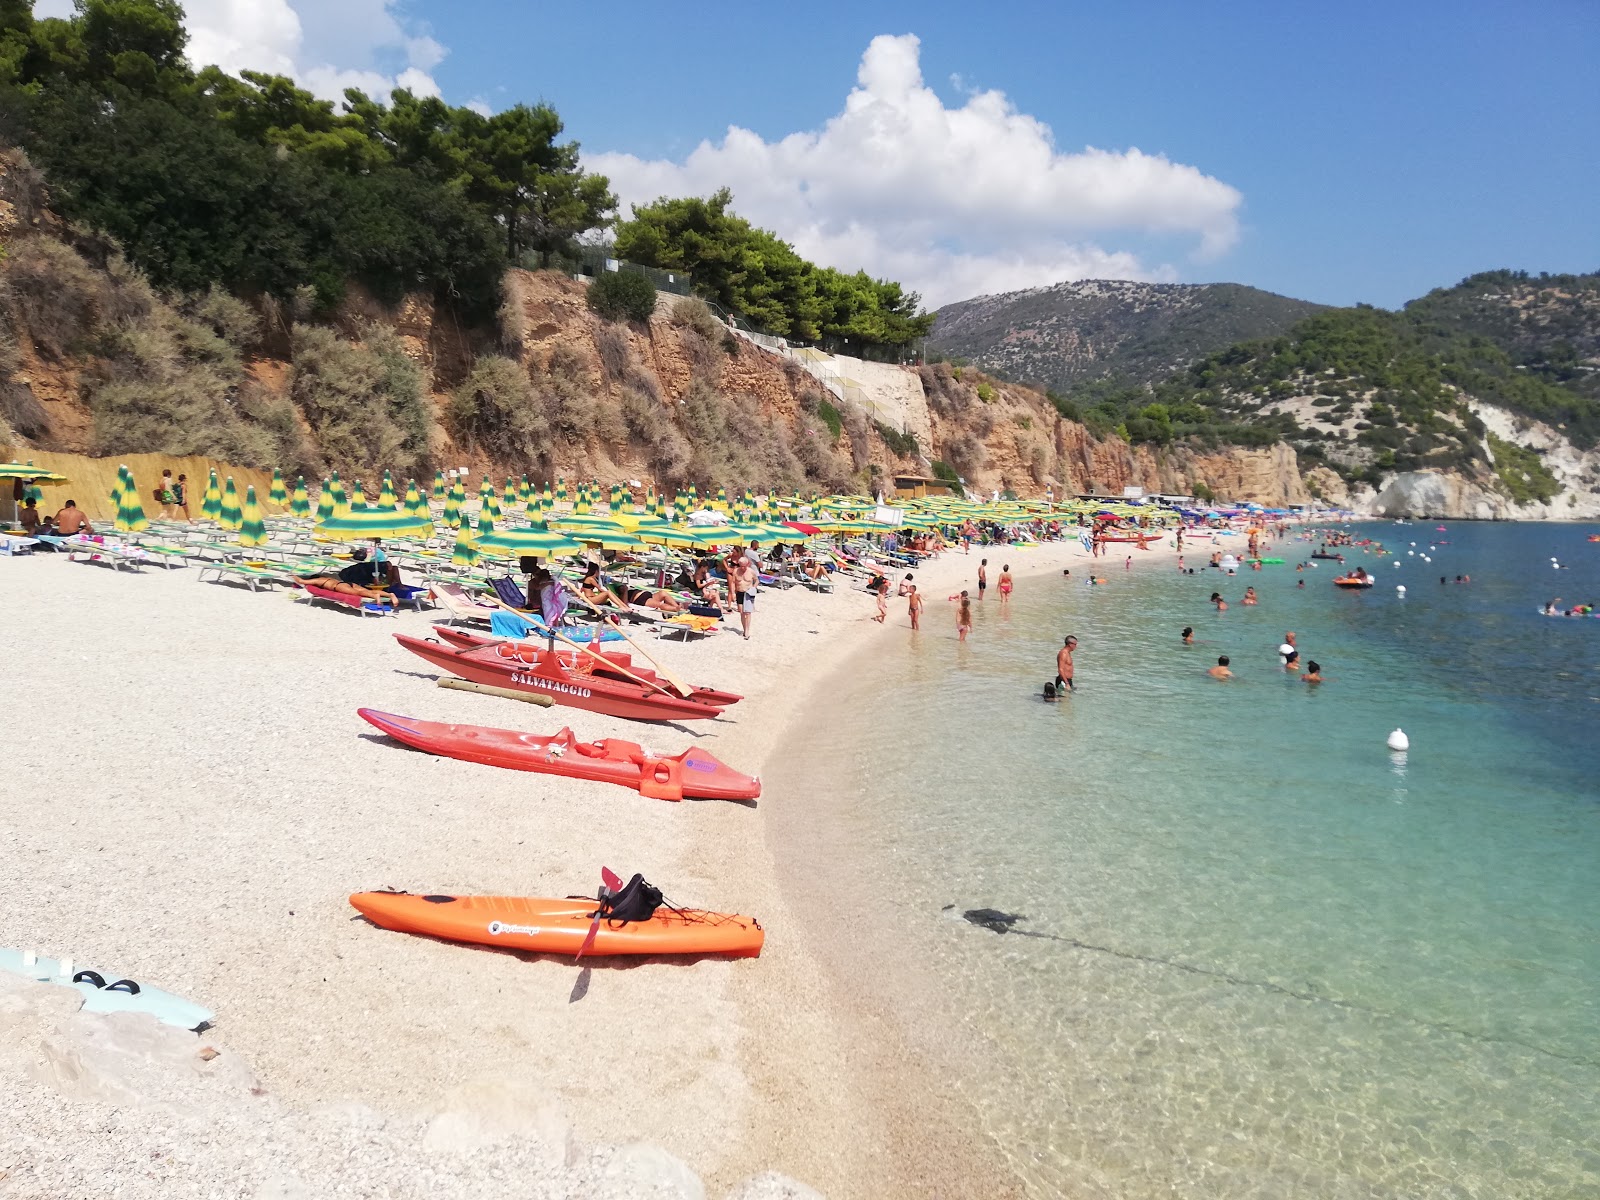 Spiaggia di Mattinatella'in fotoğrafı geniş plaj ile birlikte